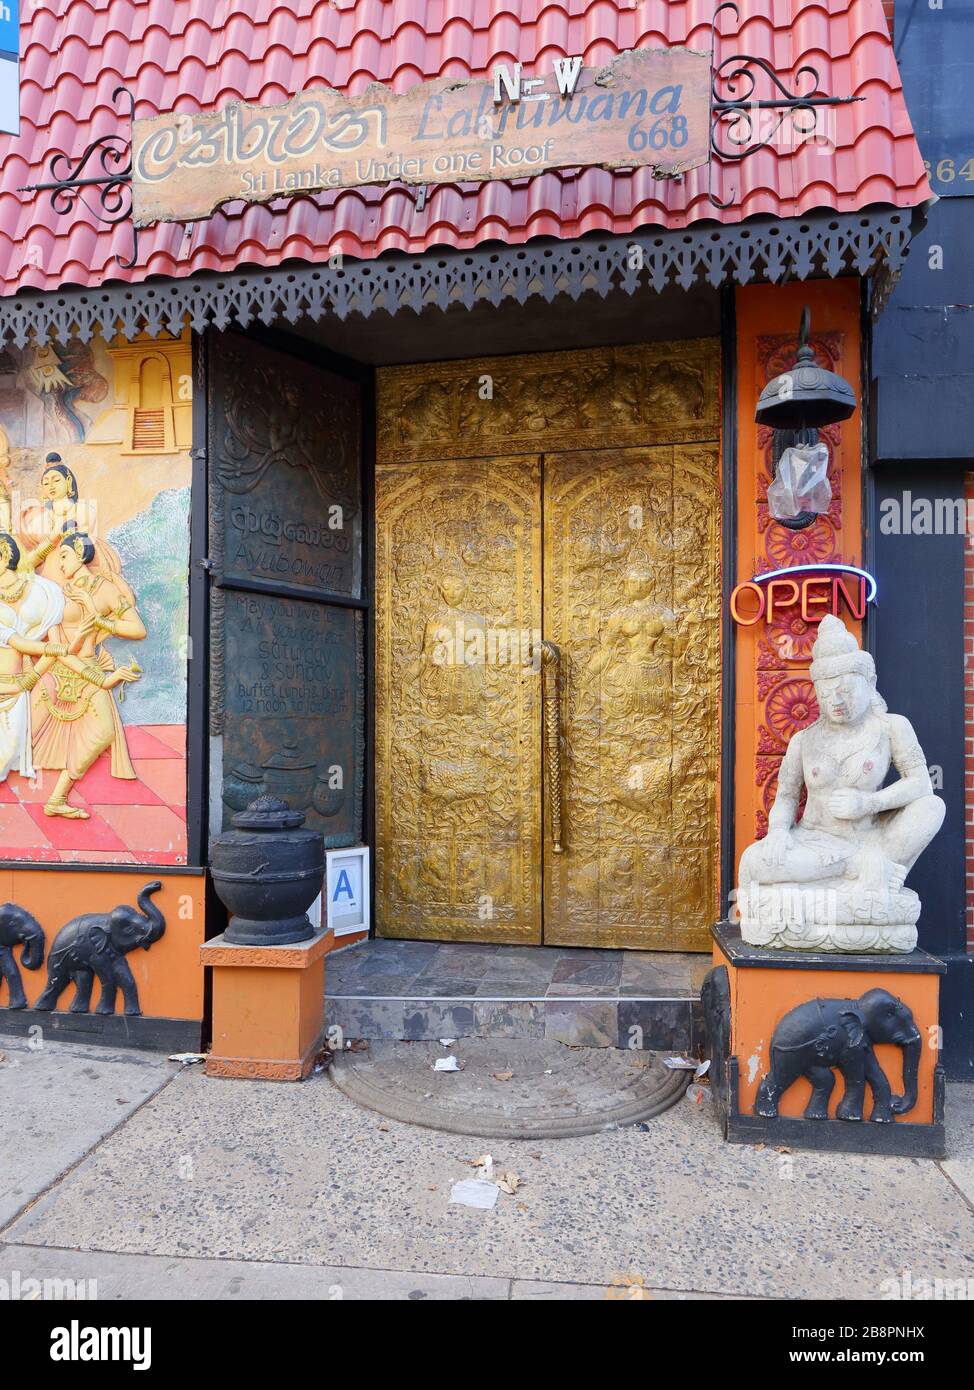 Lakruwana, 668 Bay St, Staten Island, NY. exterior storefront of a Sri Lankan buffet restaurant in Stapleton. Stock Photo